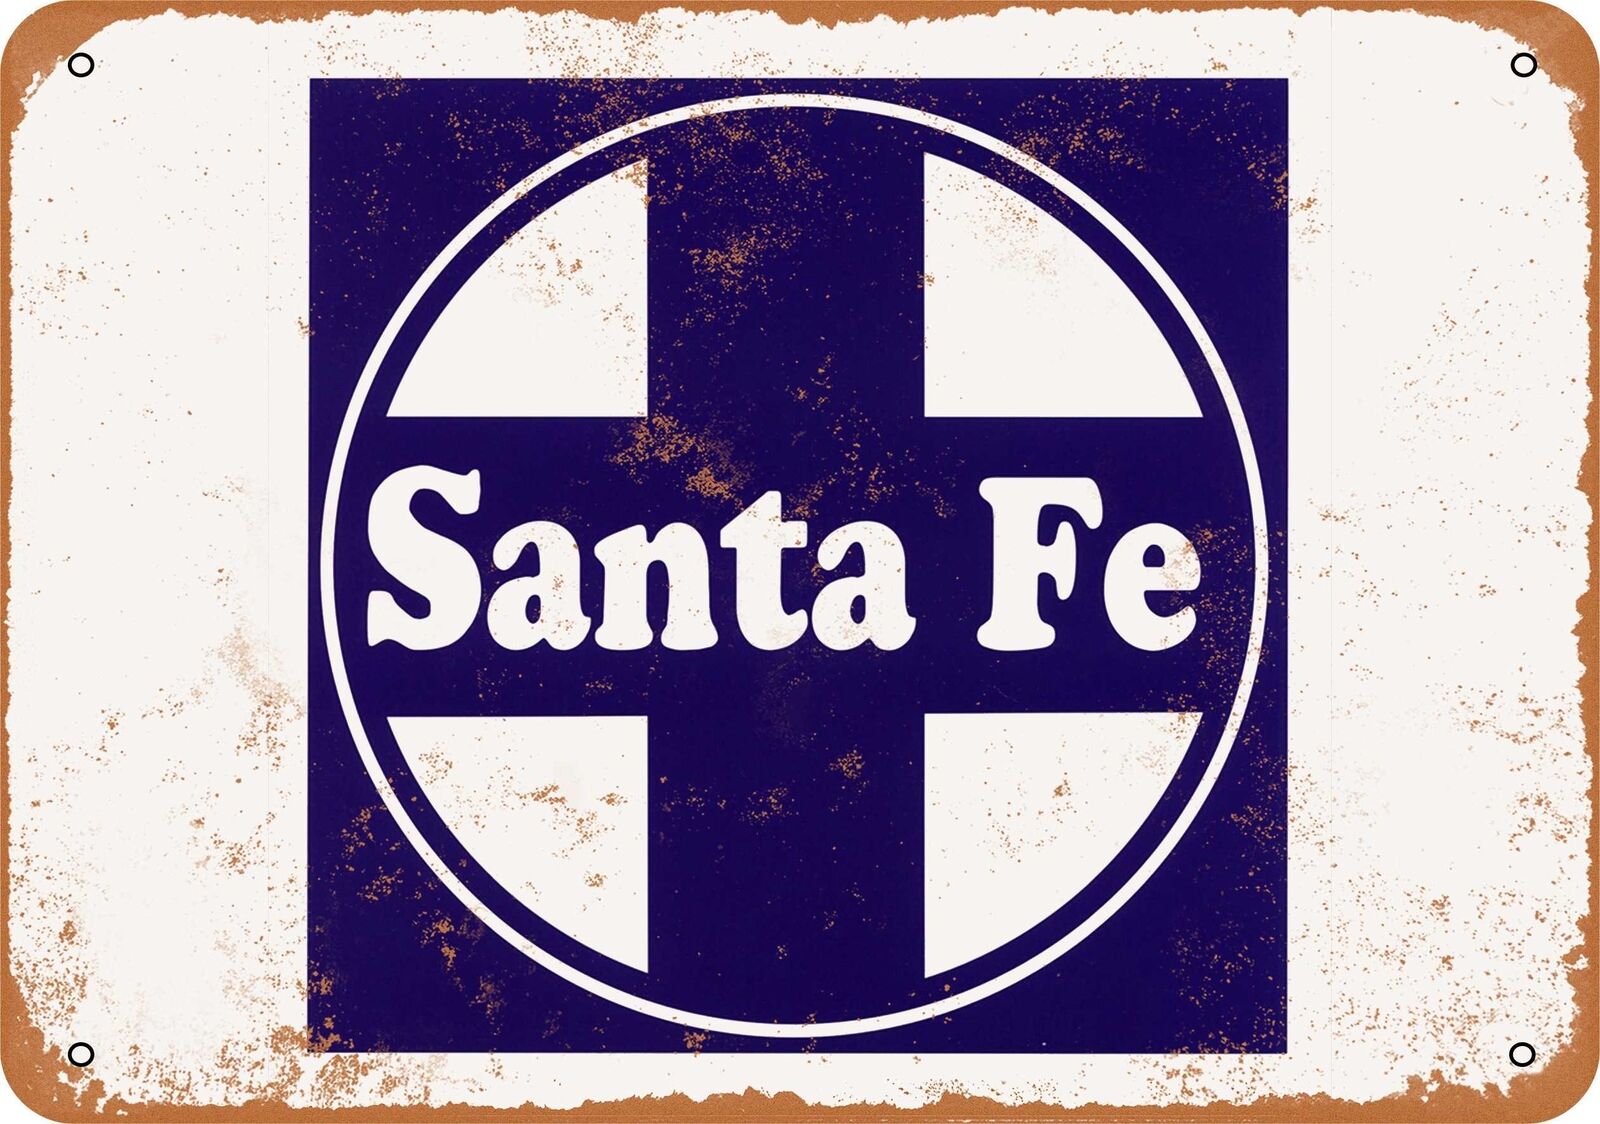 Metal Sign - Santa Fe Railroad -- Vintage Look